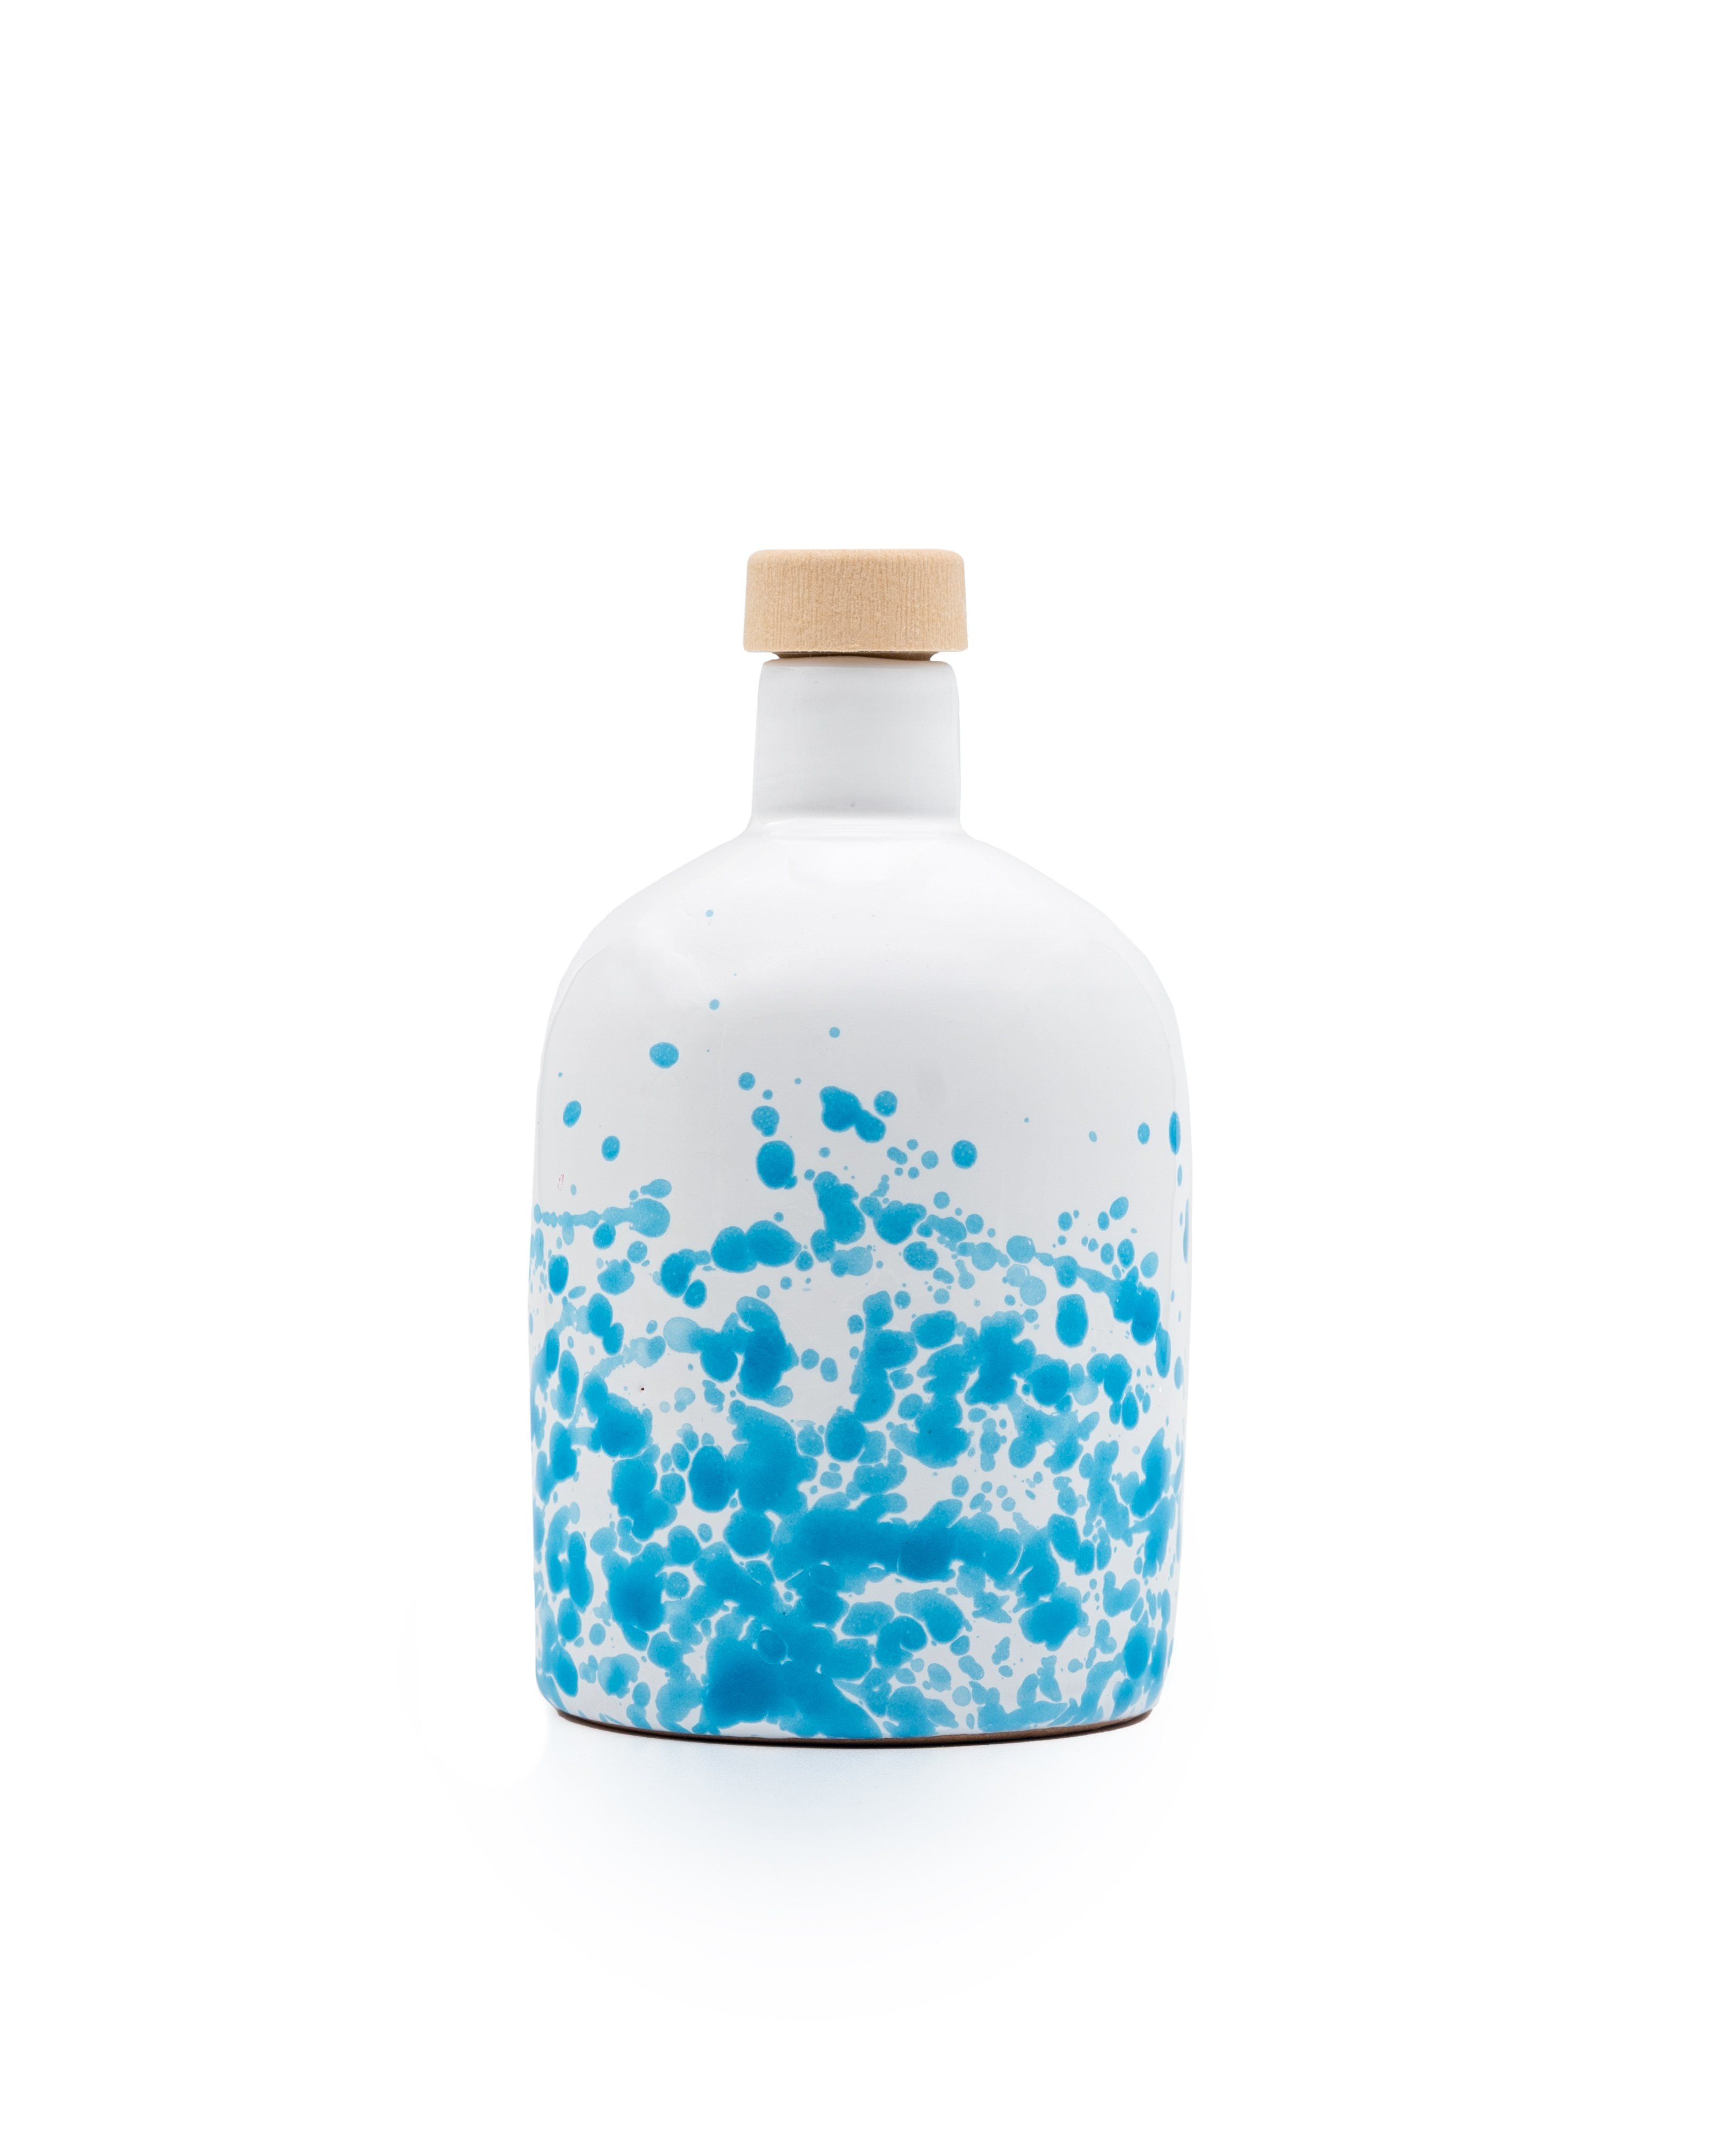 ALLEGRO Aceite de Oliva Extra Virgen nativo, filtrado, botella de cerámica azul de 500ml.